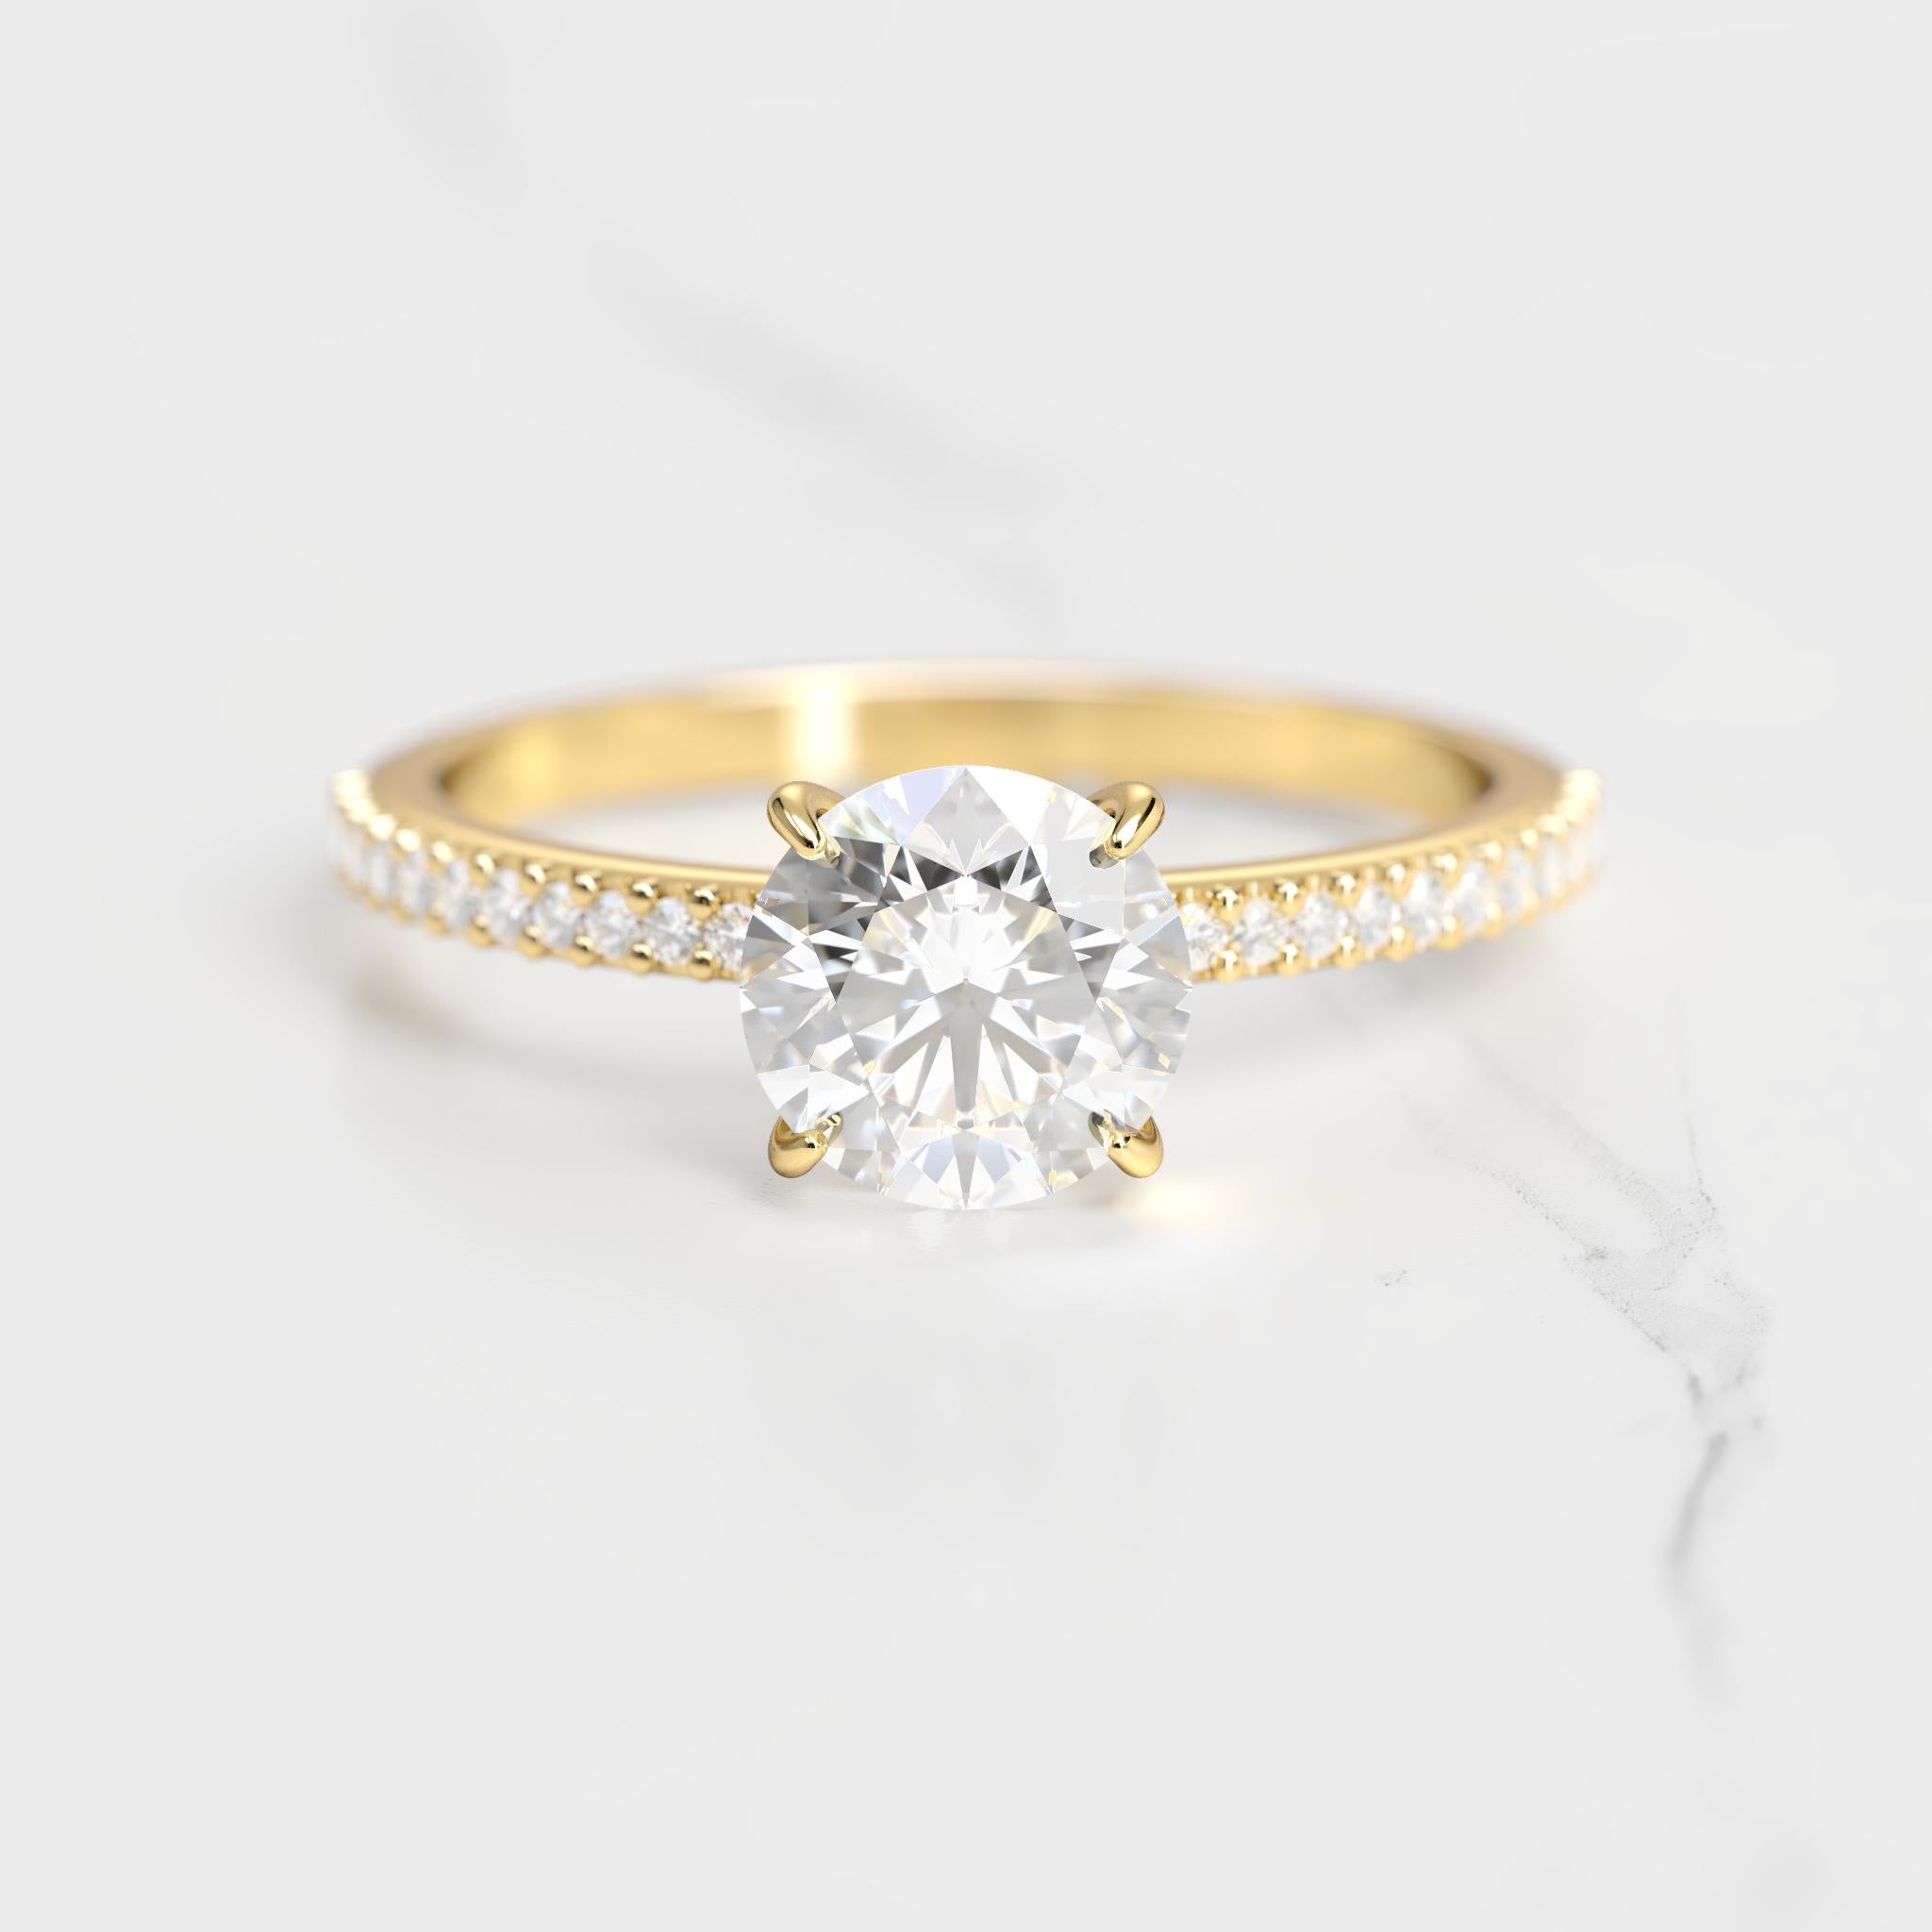 ROUND HALF PAVE DIAMOND RING - 18k yellow gold / 1.25ct / natural diamond